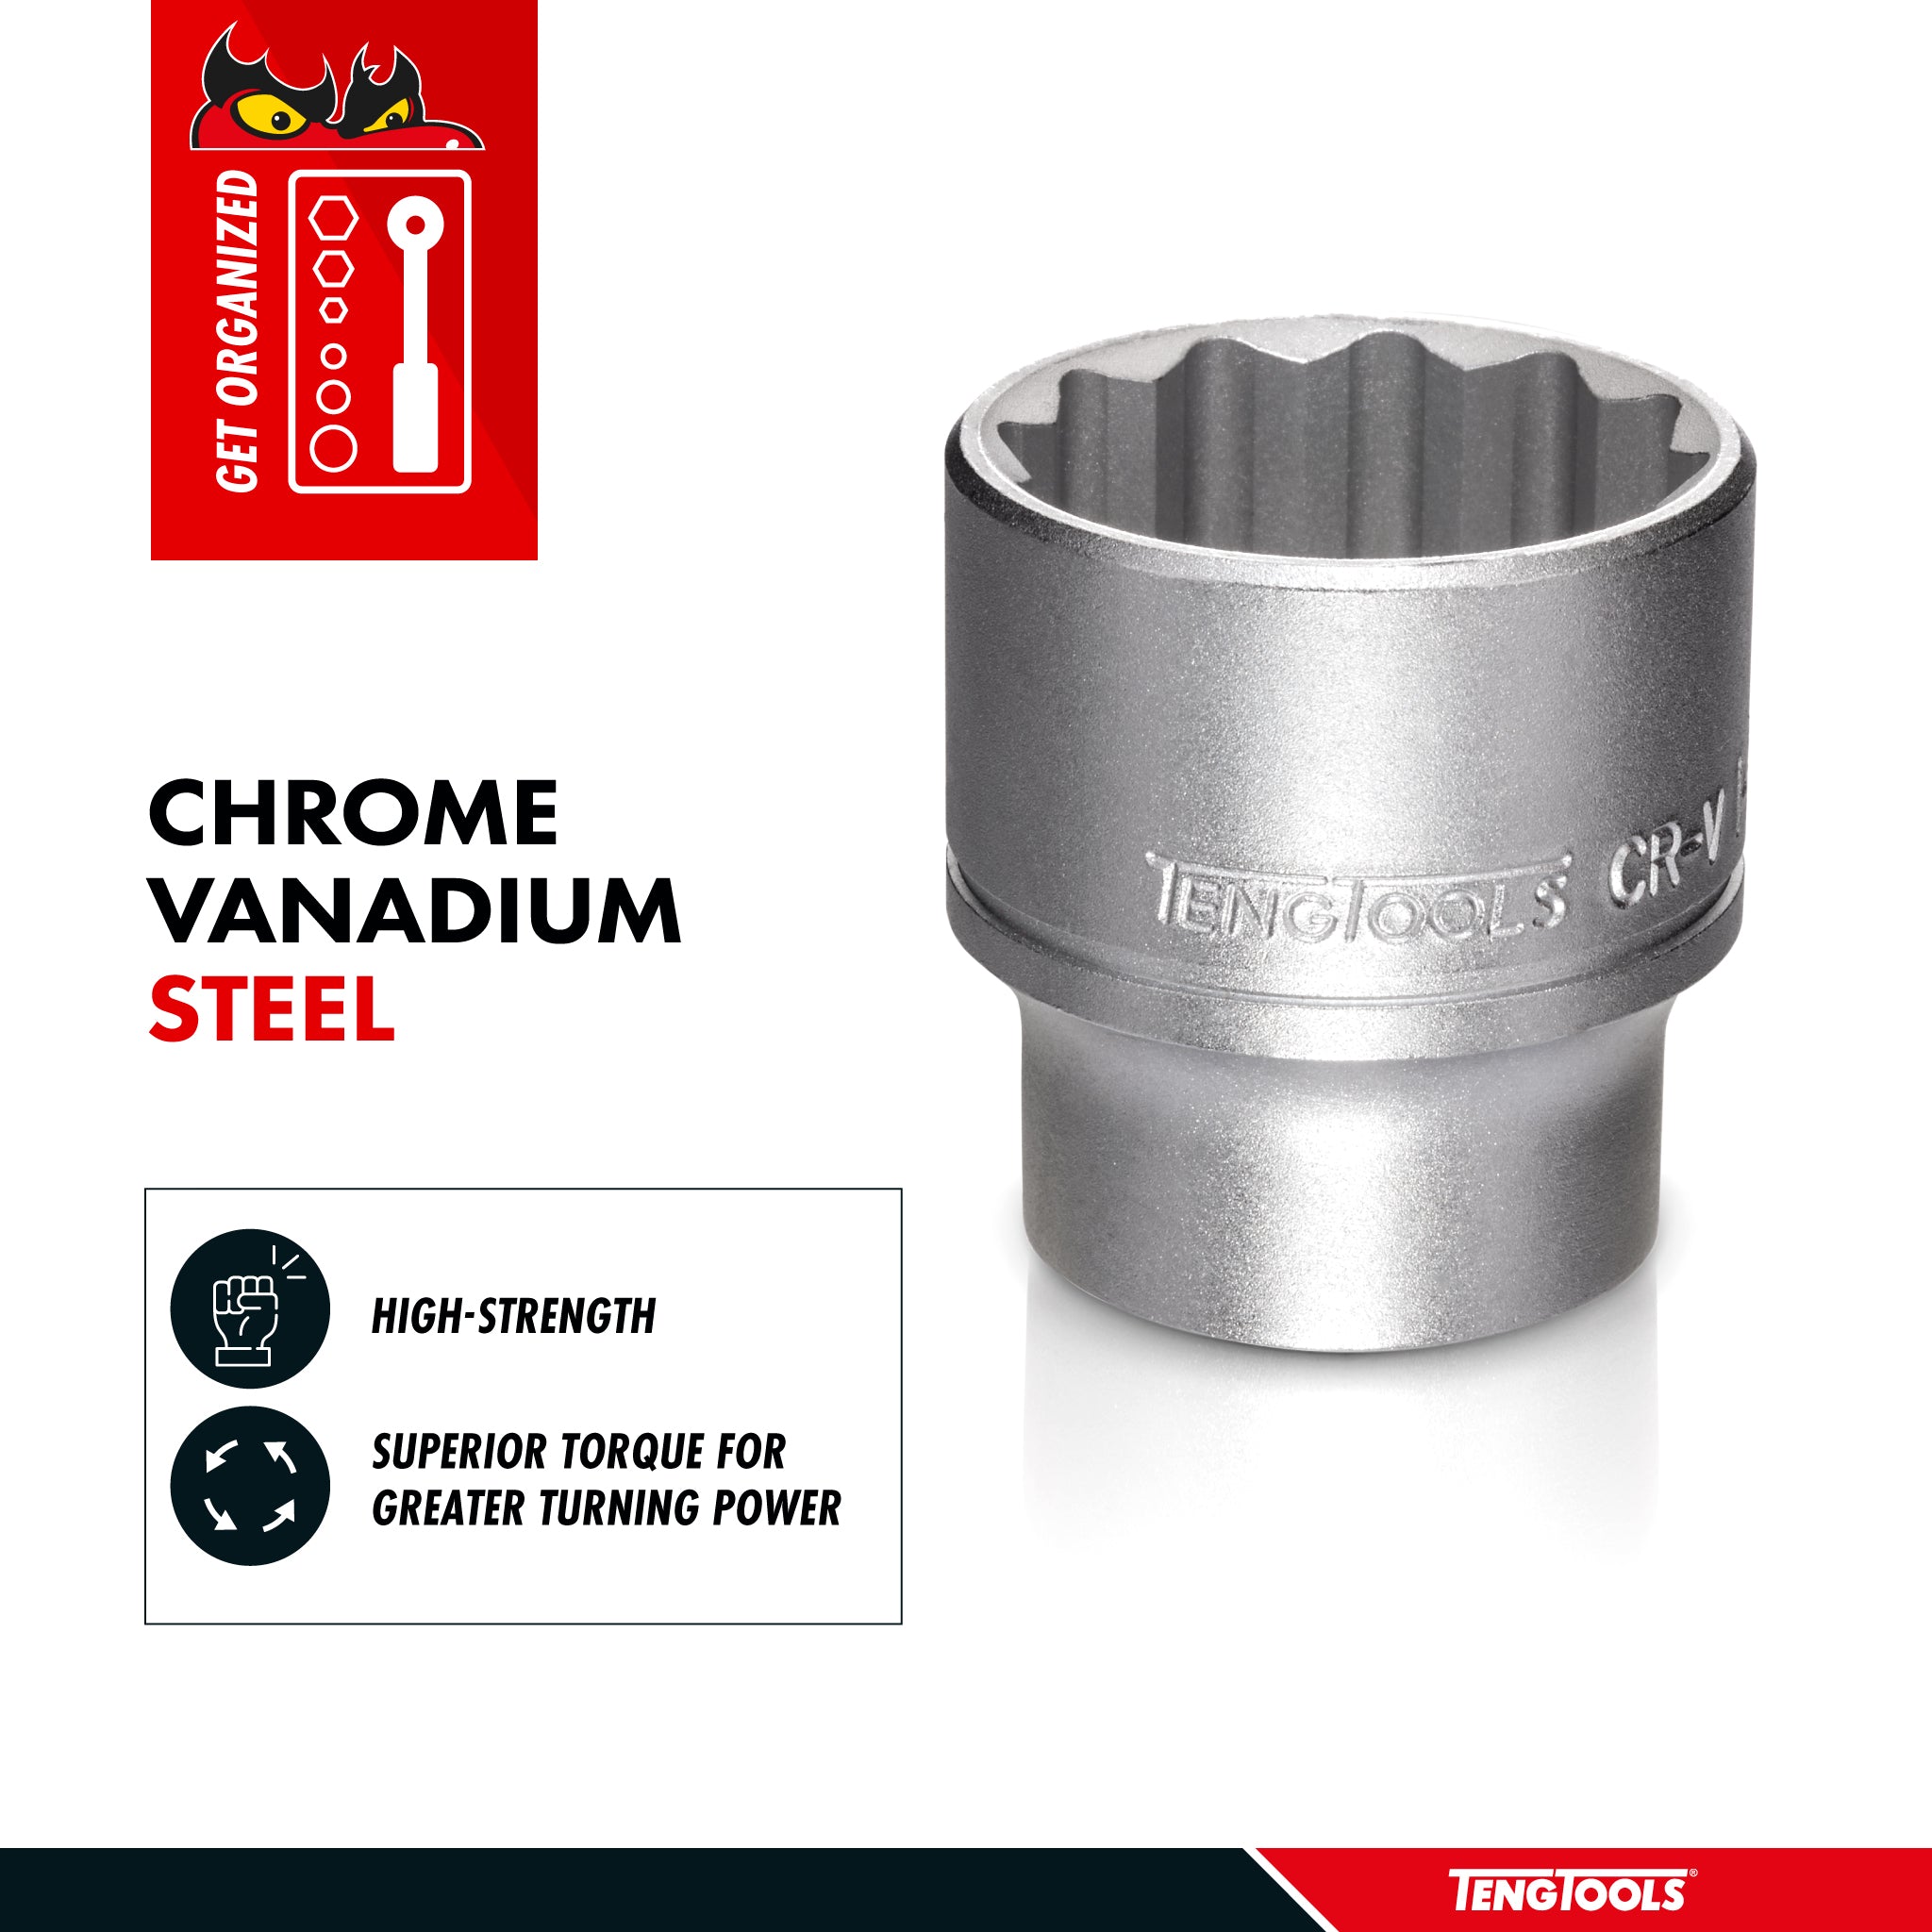 Teng Tools 1/2 Inch Drive 12 Point Metric Shallow Chrome Vanadium Sockets - 28mm